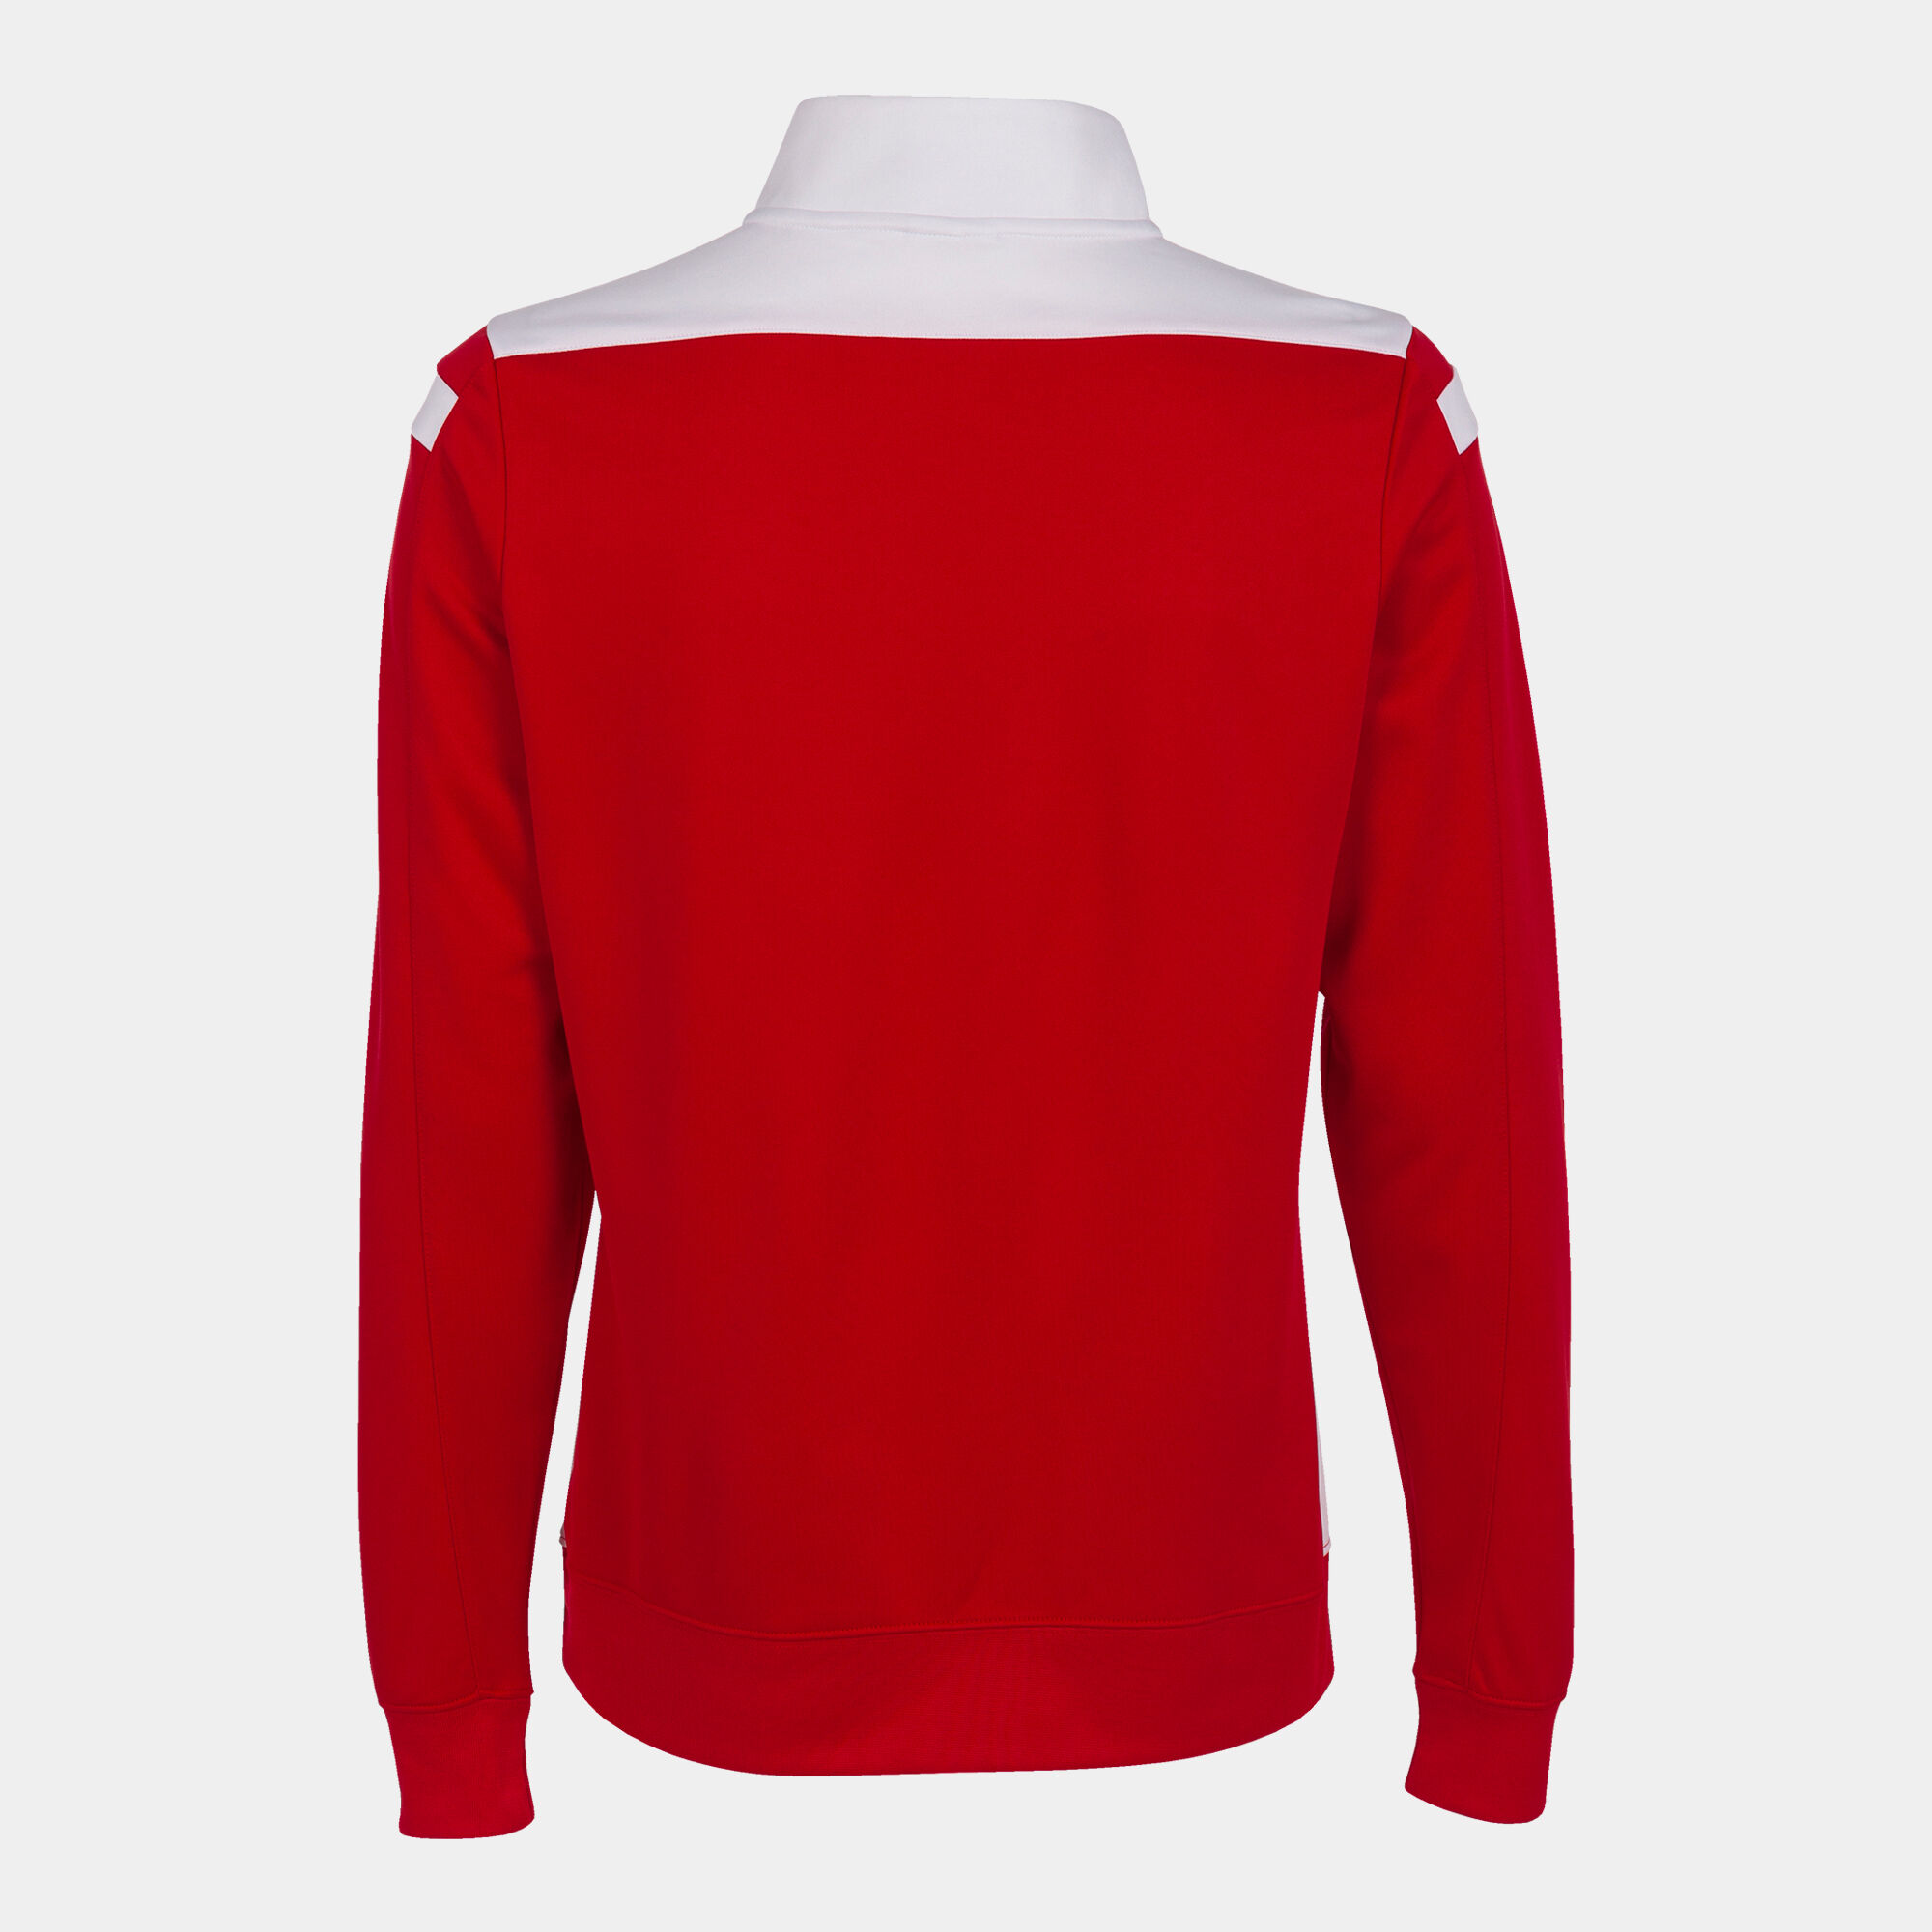 Sweatshirt woman Championship VI red white